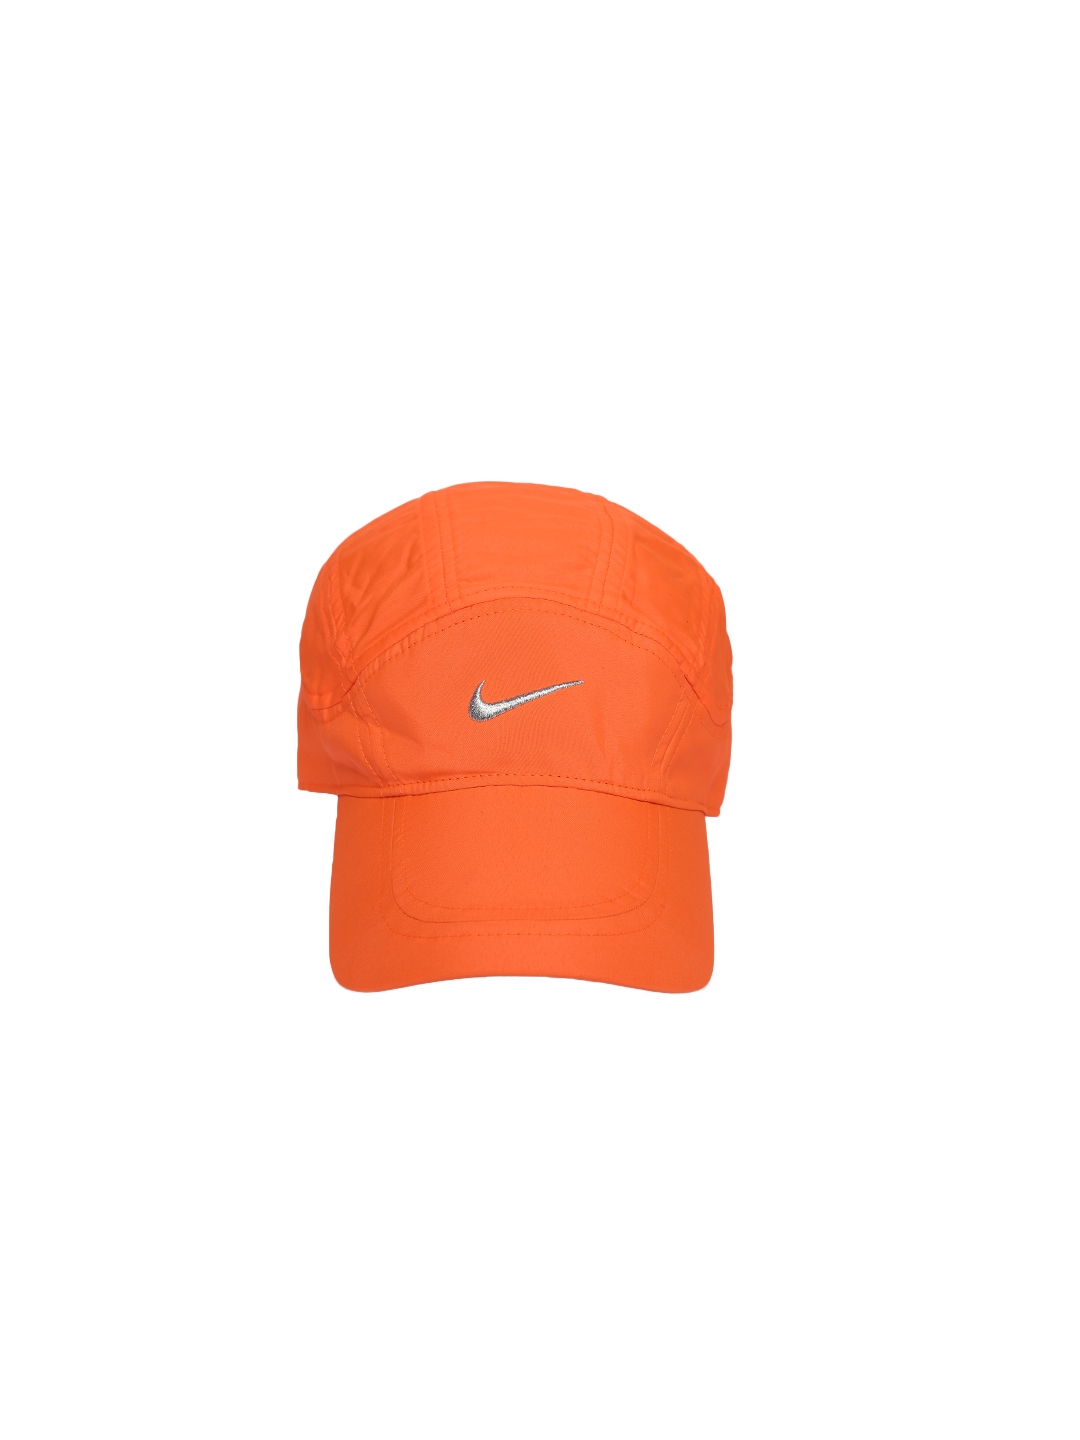 nike orange cap